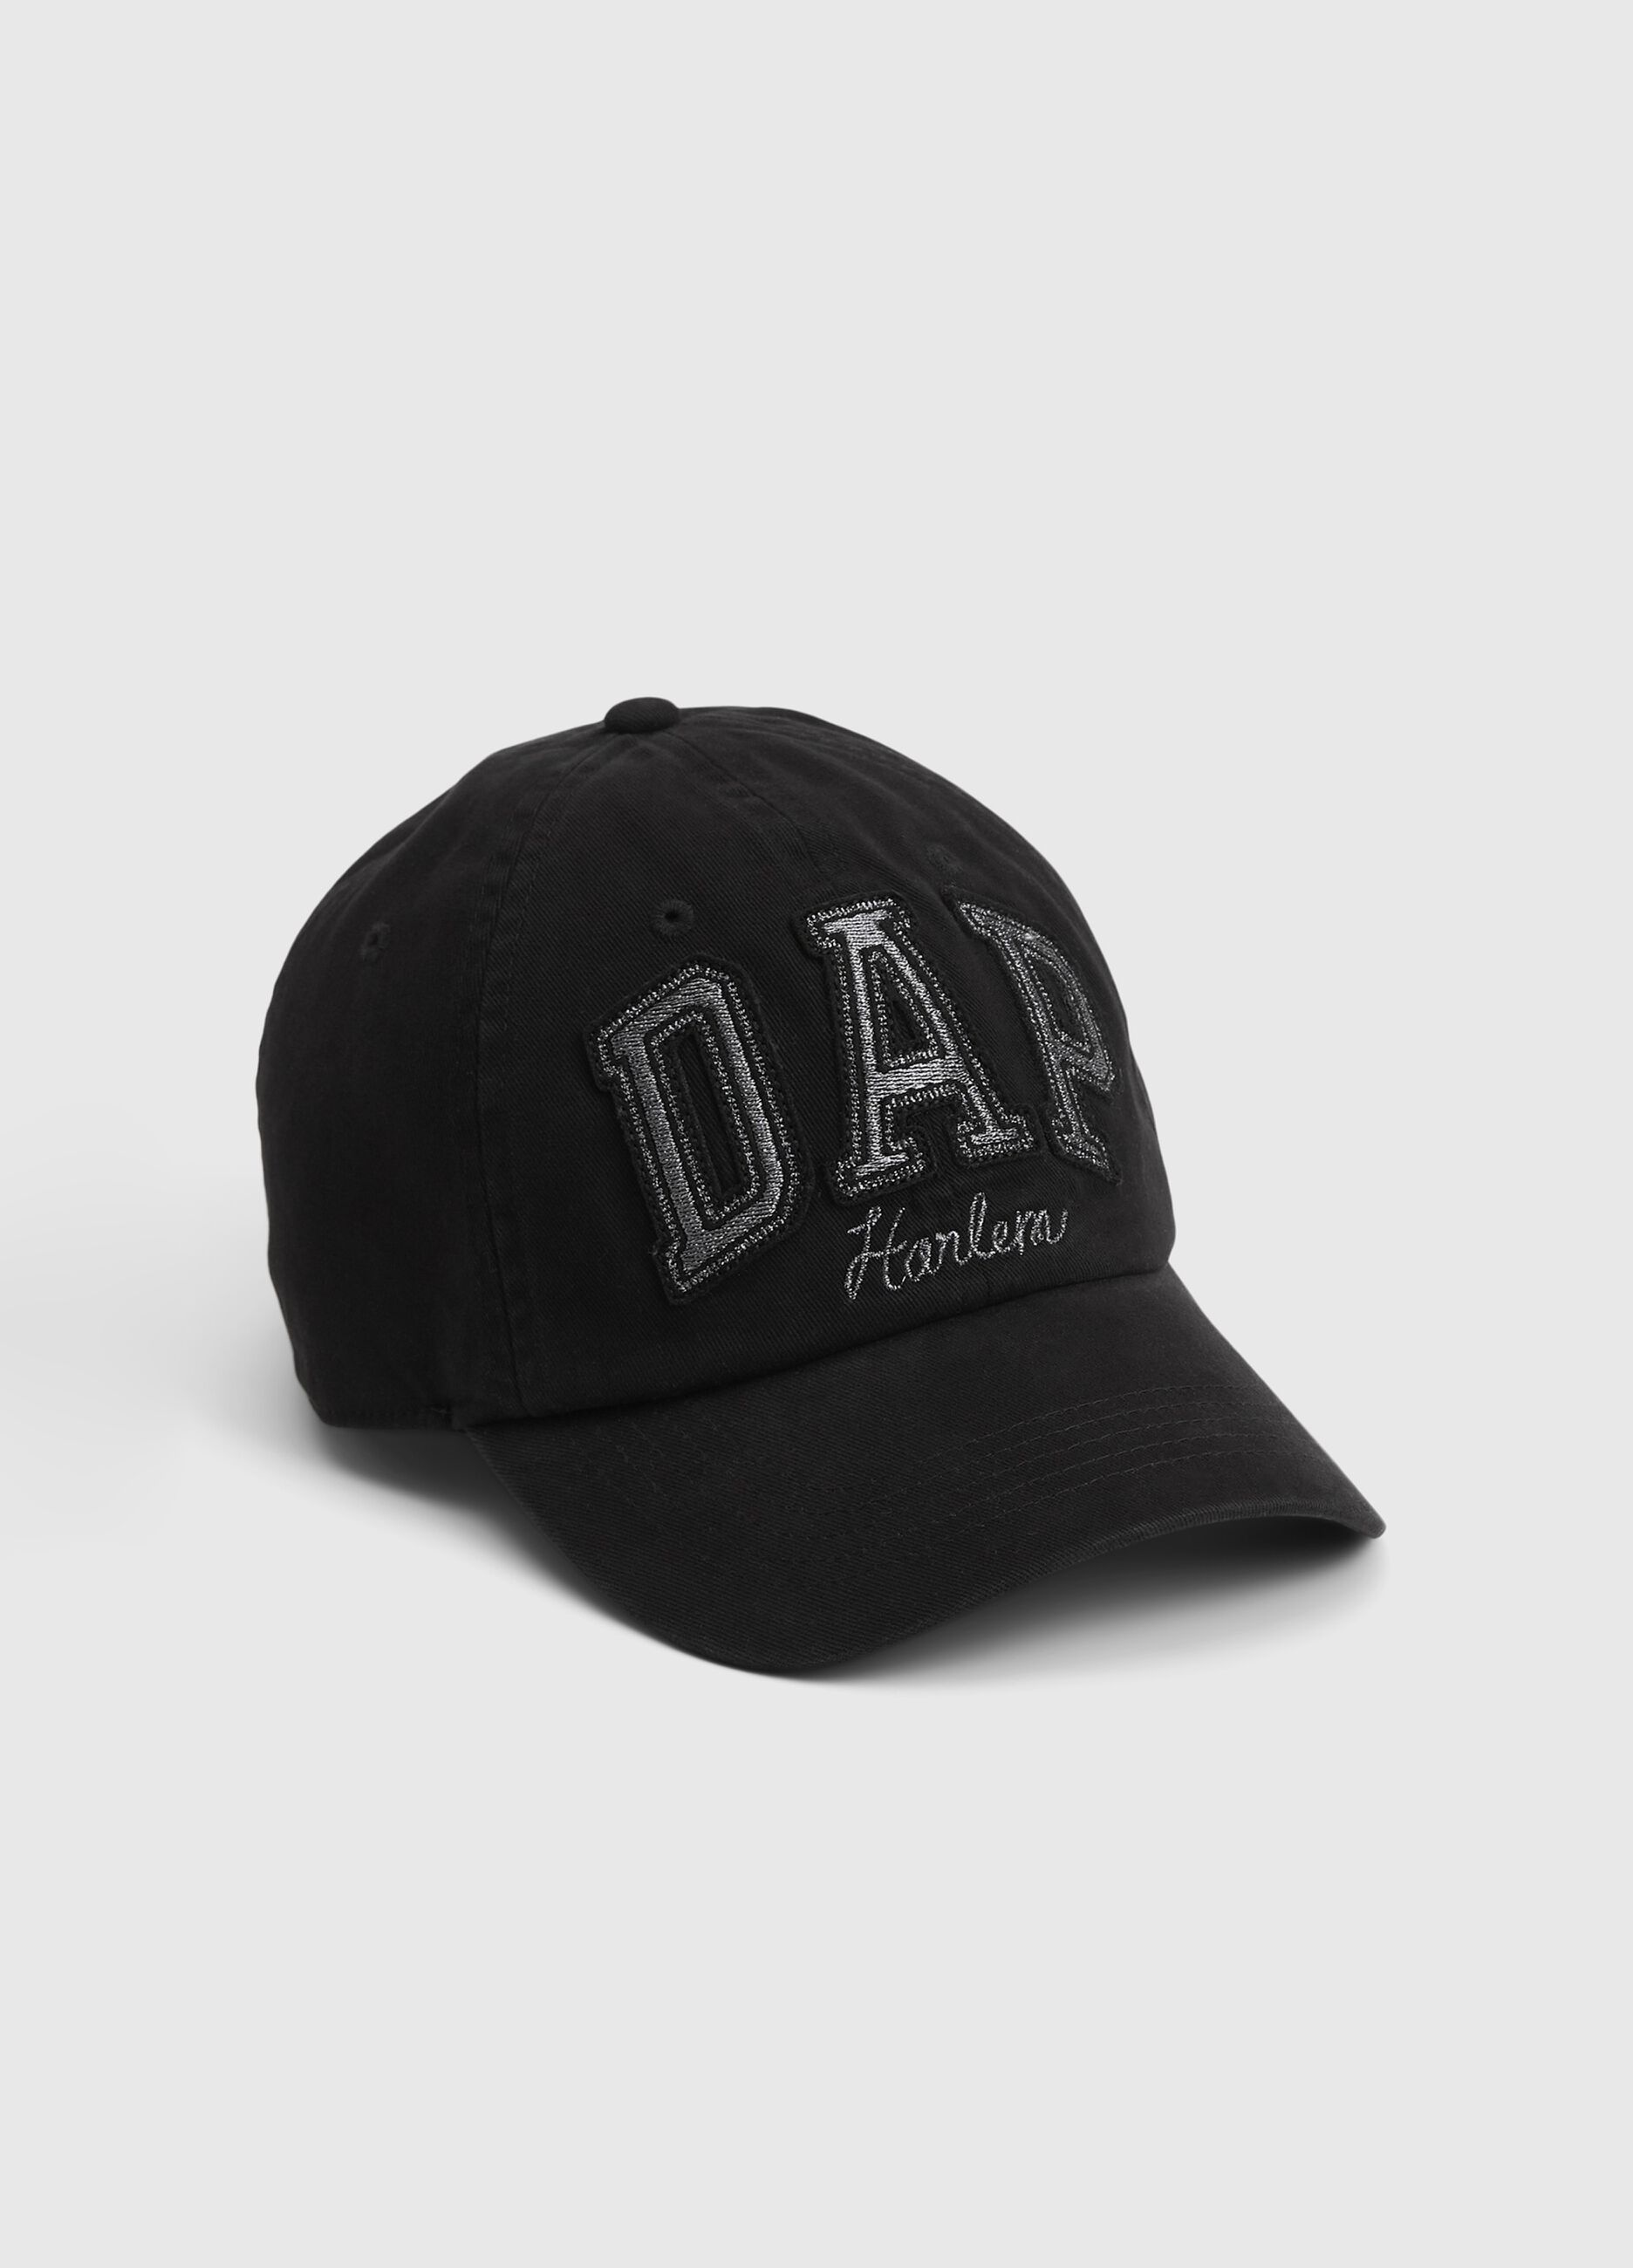 Baseball cap with Dapper Dan of Harlem embroidery